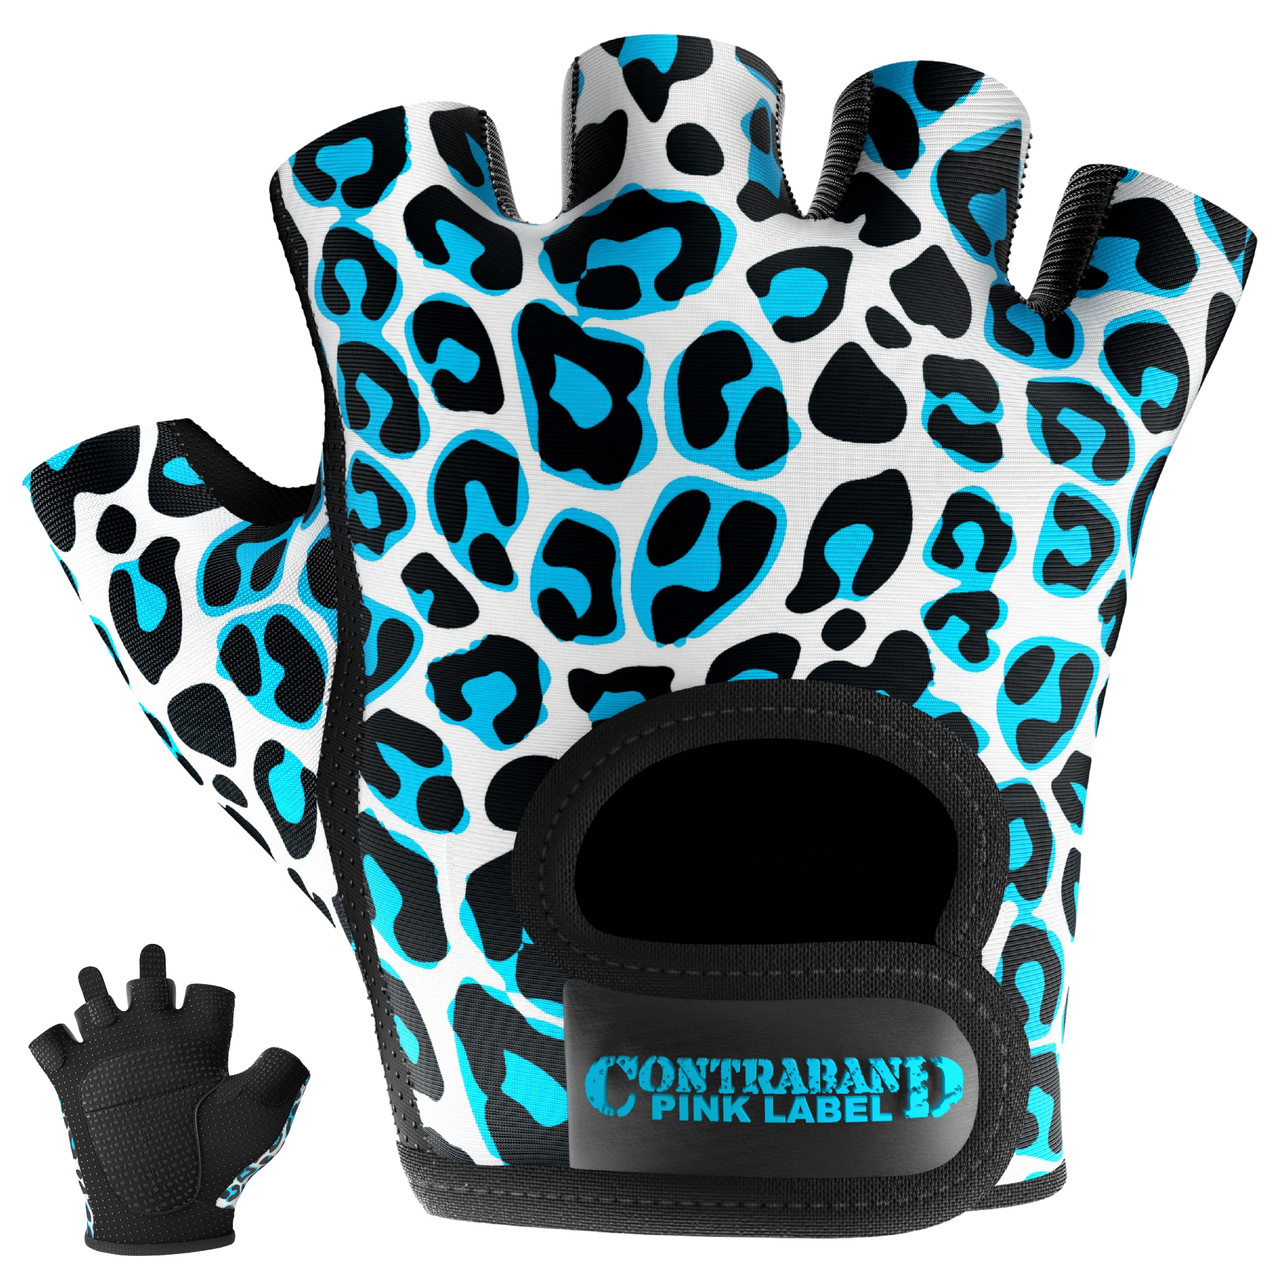 Жіночі рукавички для фітнесу Contraband Pink Label 5297 Leopard Print Gloves (Turquoise Blue)